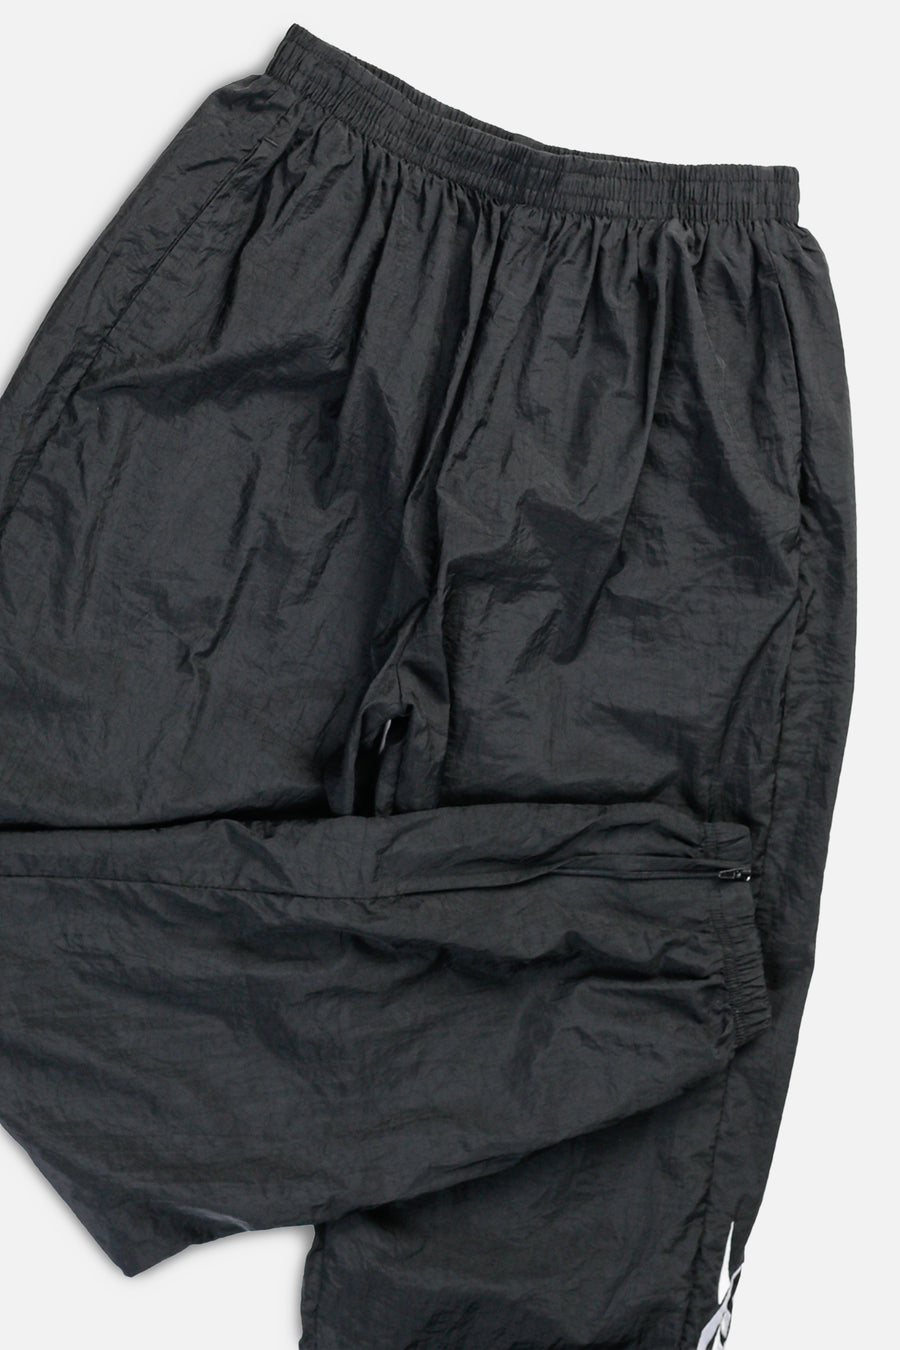 Vintage Reebok Windbreaker Pants - XL